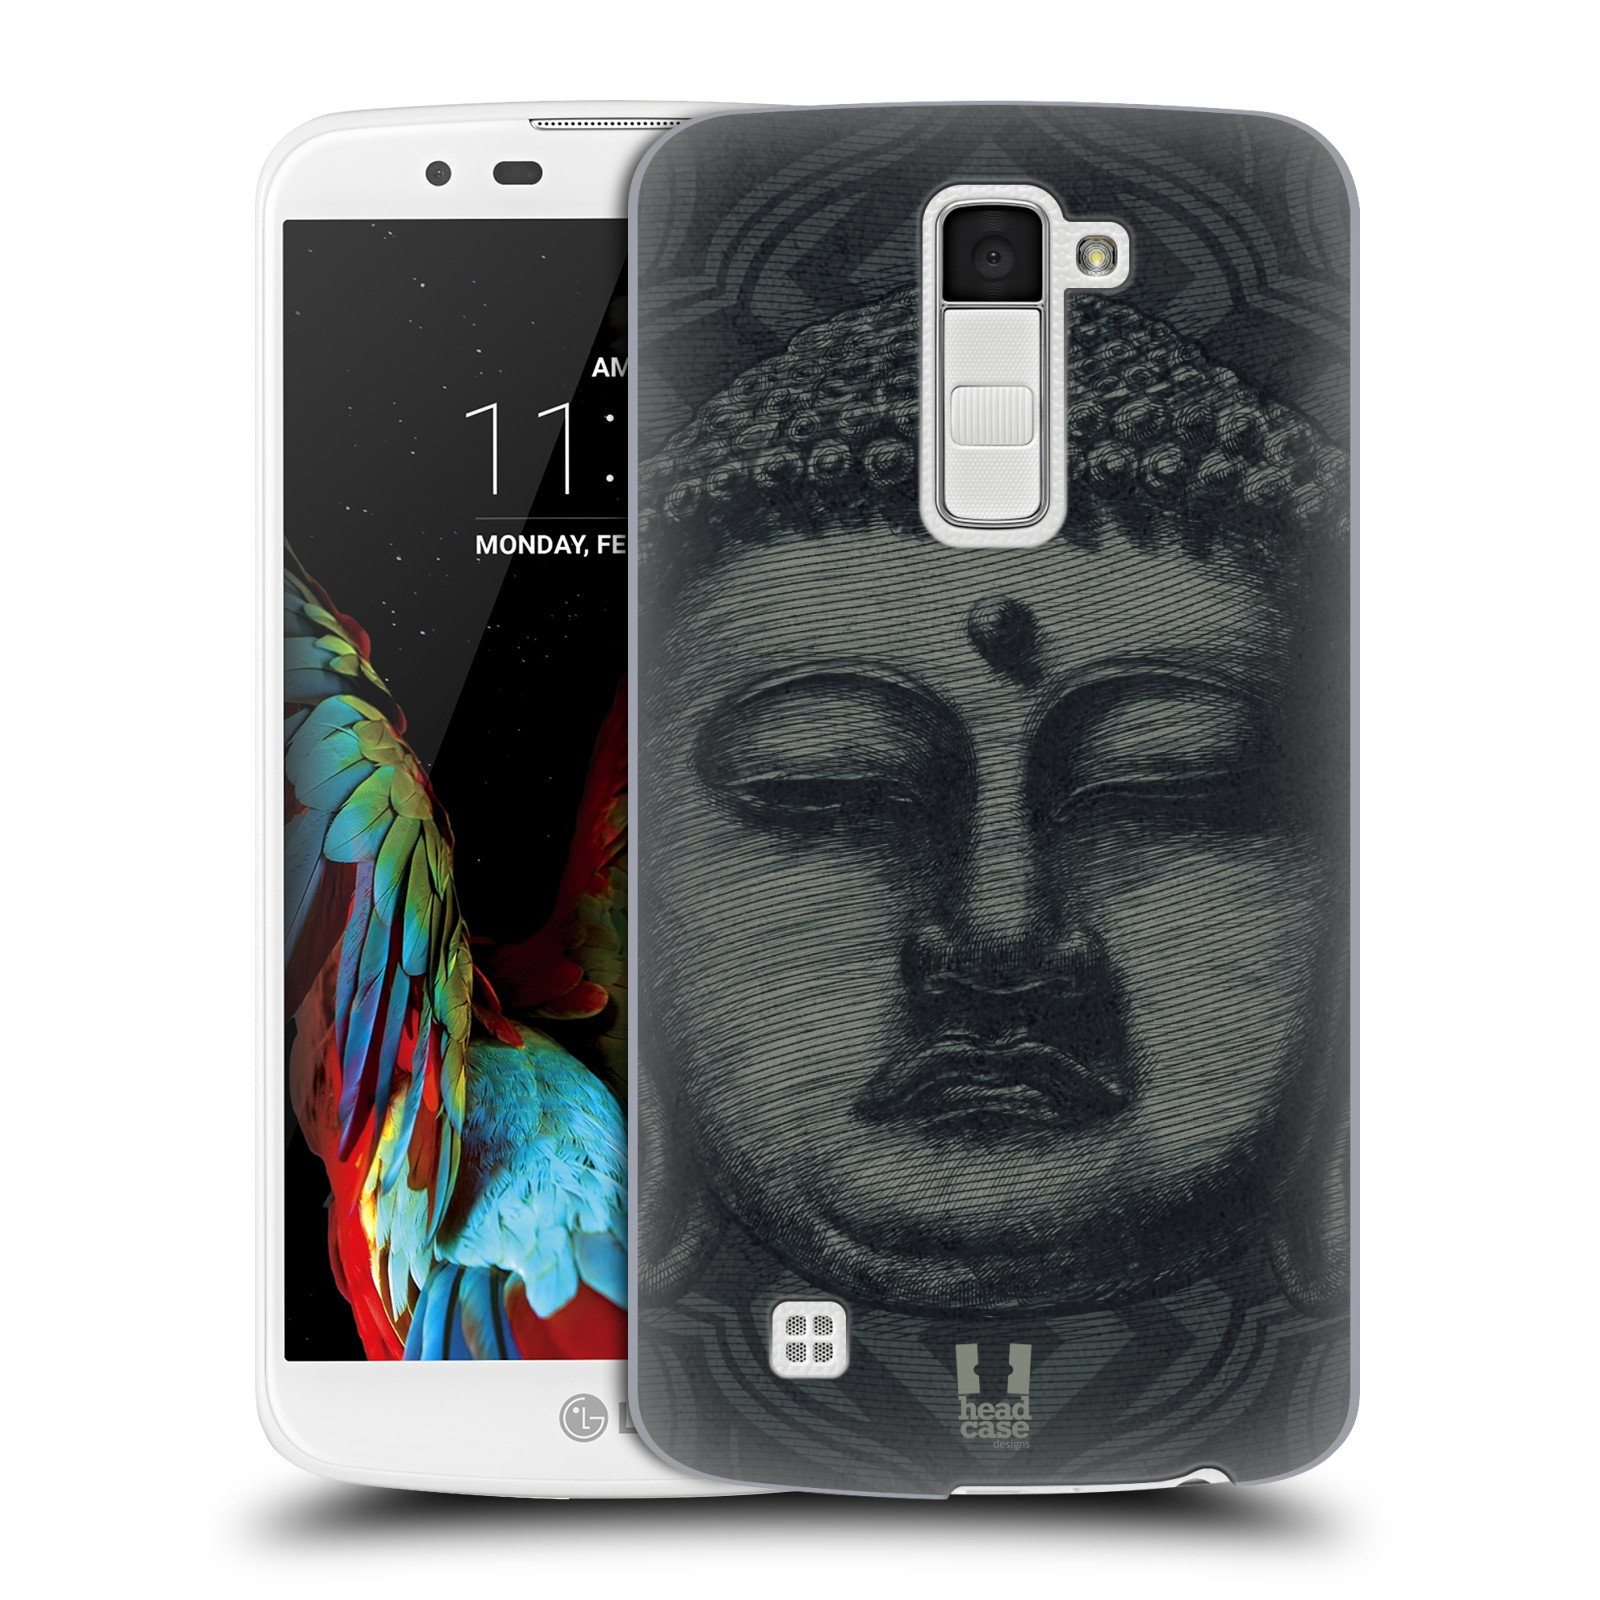 HEAD CASE plastový obal na mobil LG K10 vzor BUDDHA KAMAKURA tvář